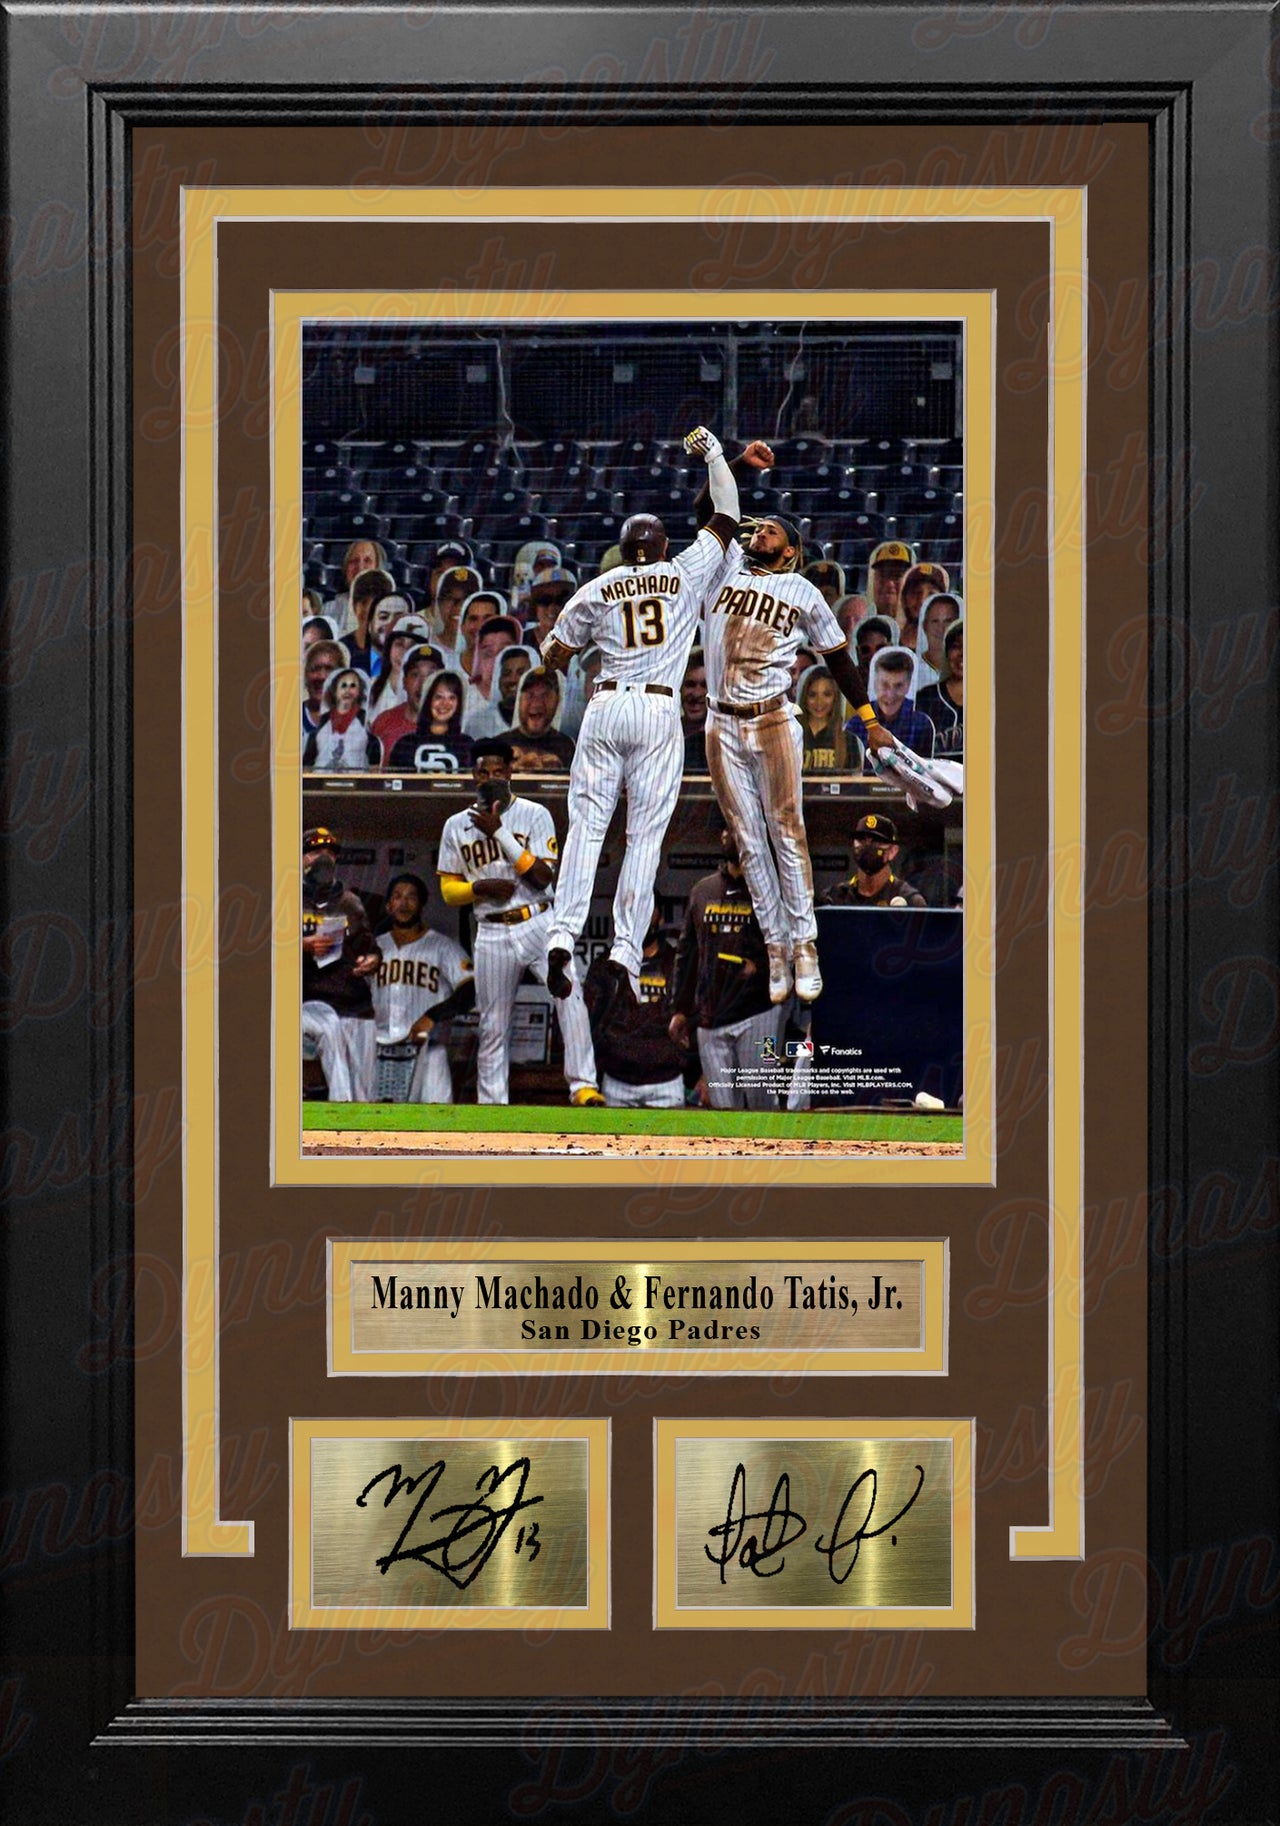 Manny Machado & Fernando Tatis, Jr. San Diego Padres 8" x 10" Framed Photo with Engraved Autographs - Dynasty Sports & Framing 